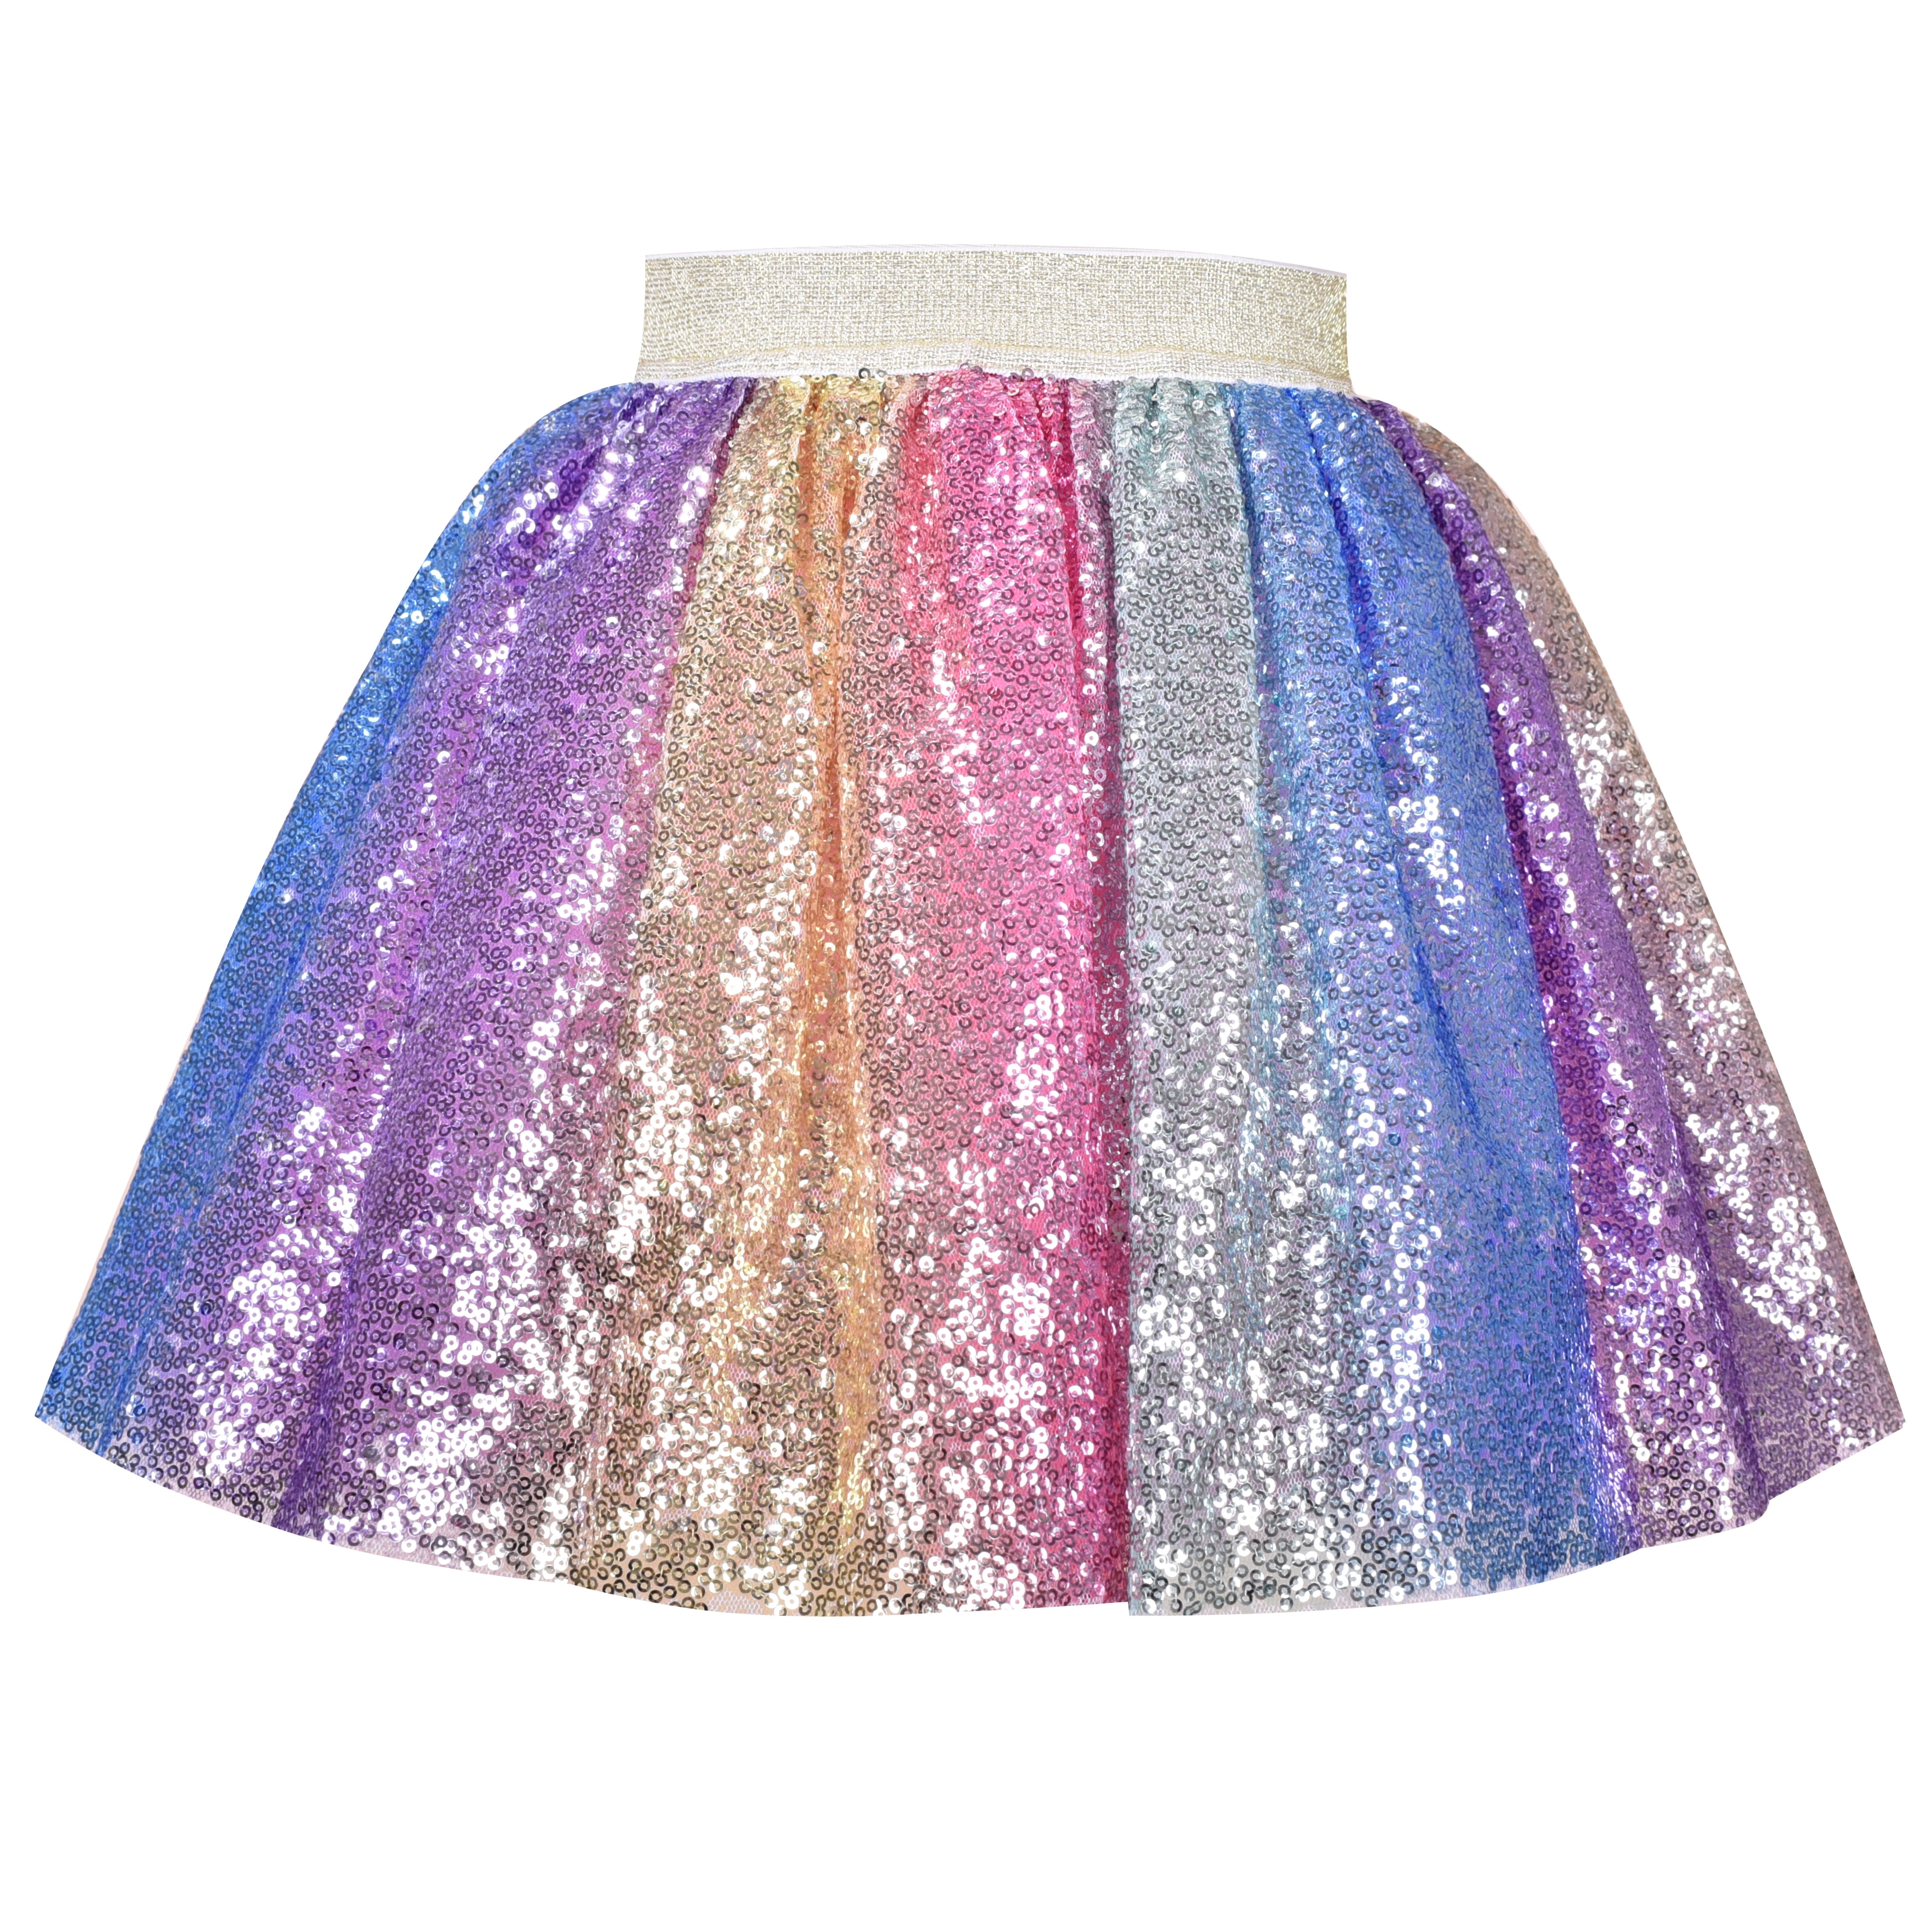 Girls Skirt Blue Heart Sequins Sparkling Tutu Dancing Age 2-12 Years